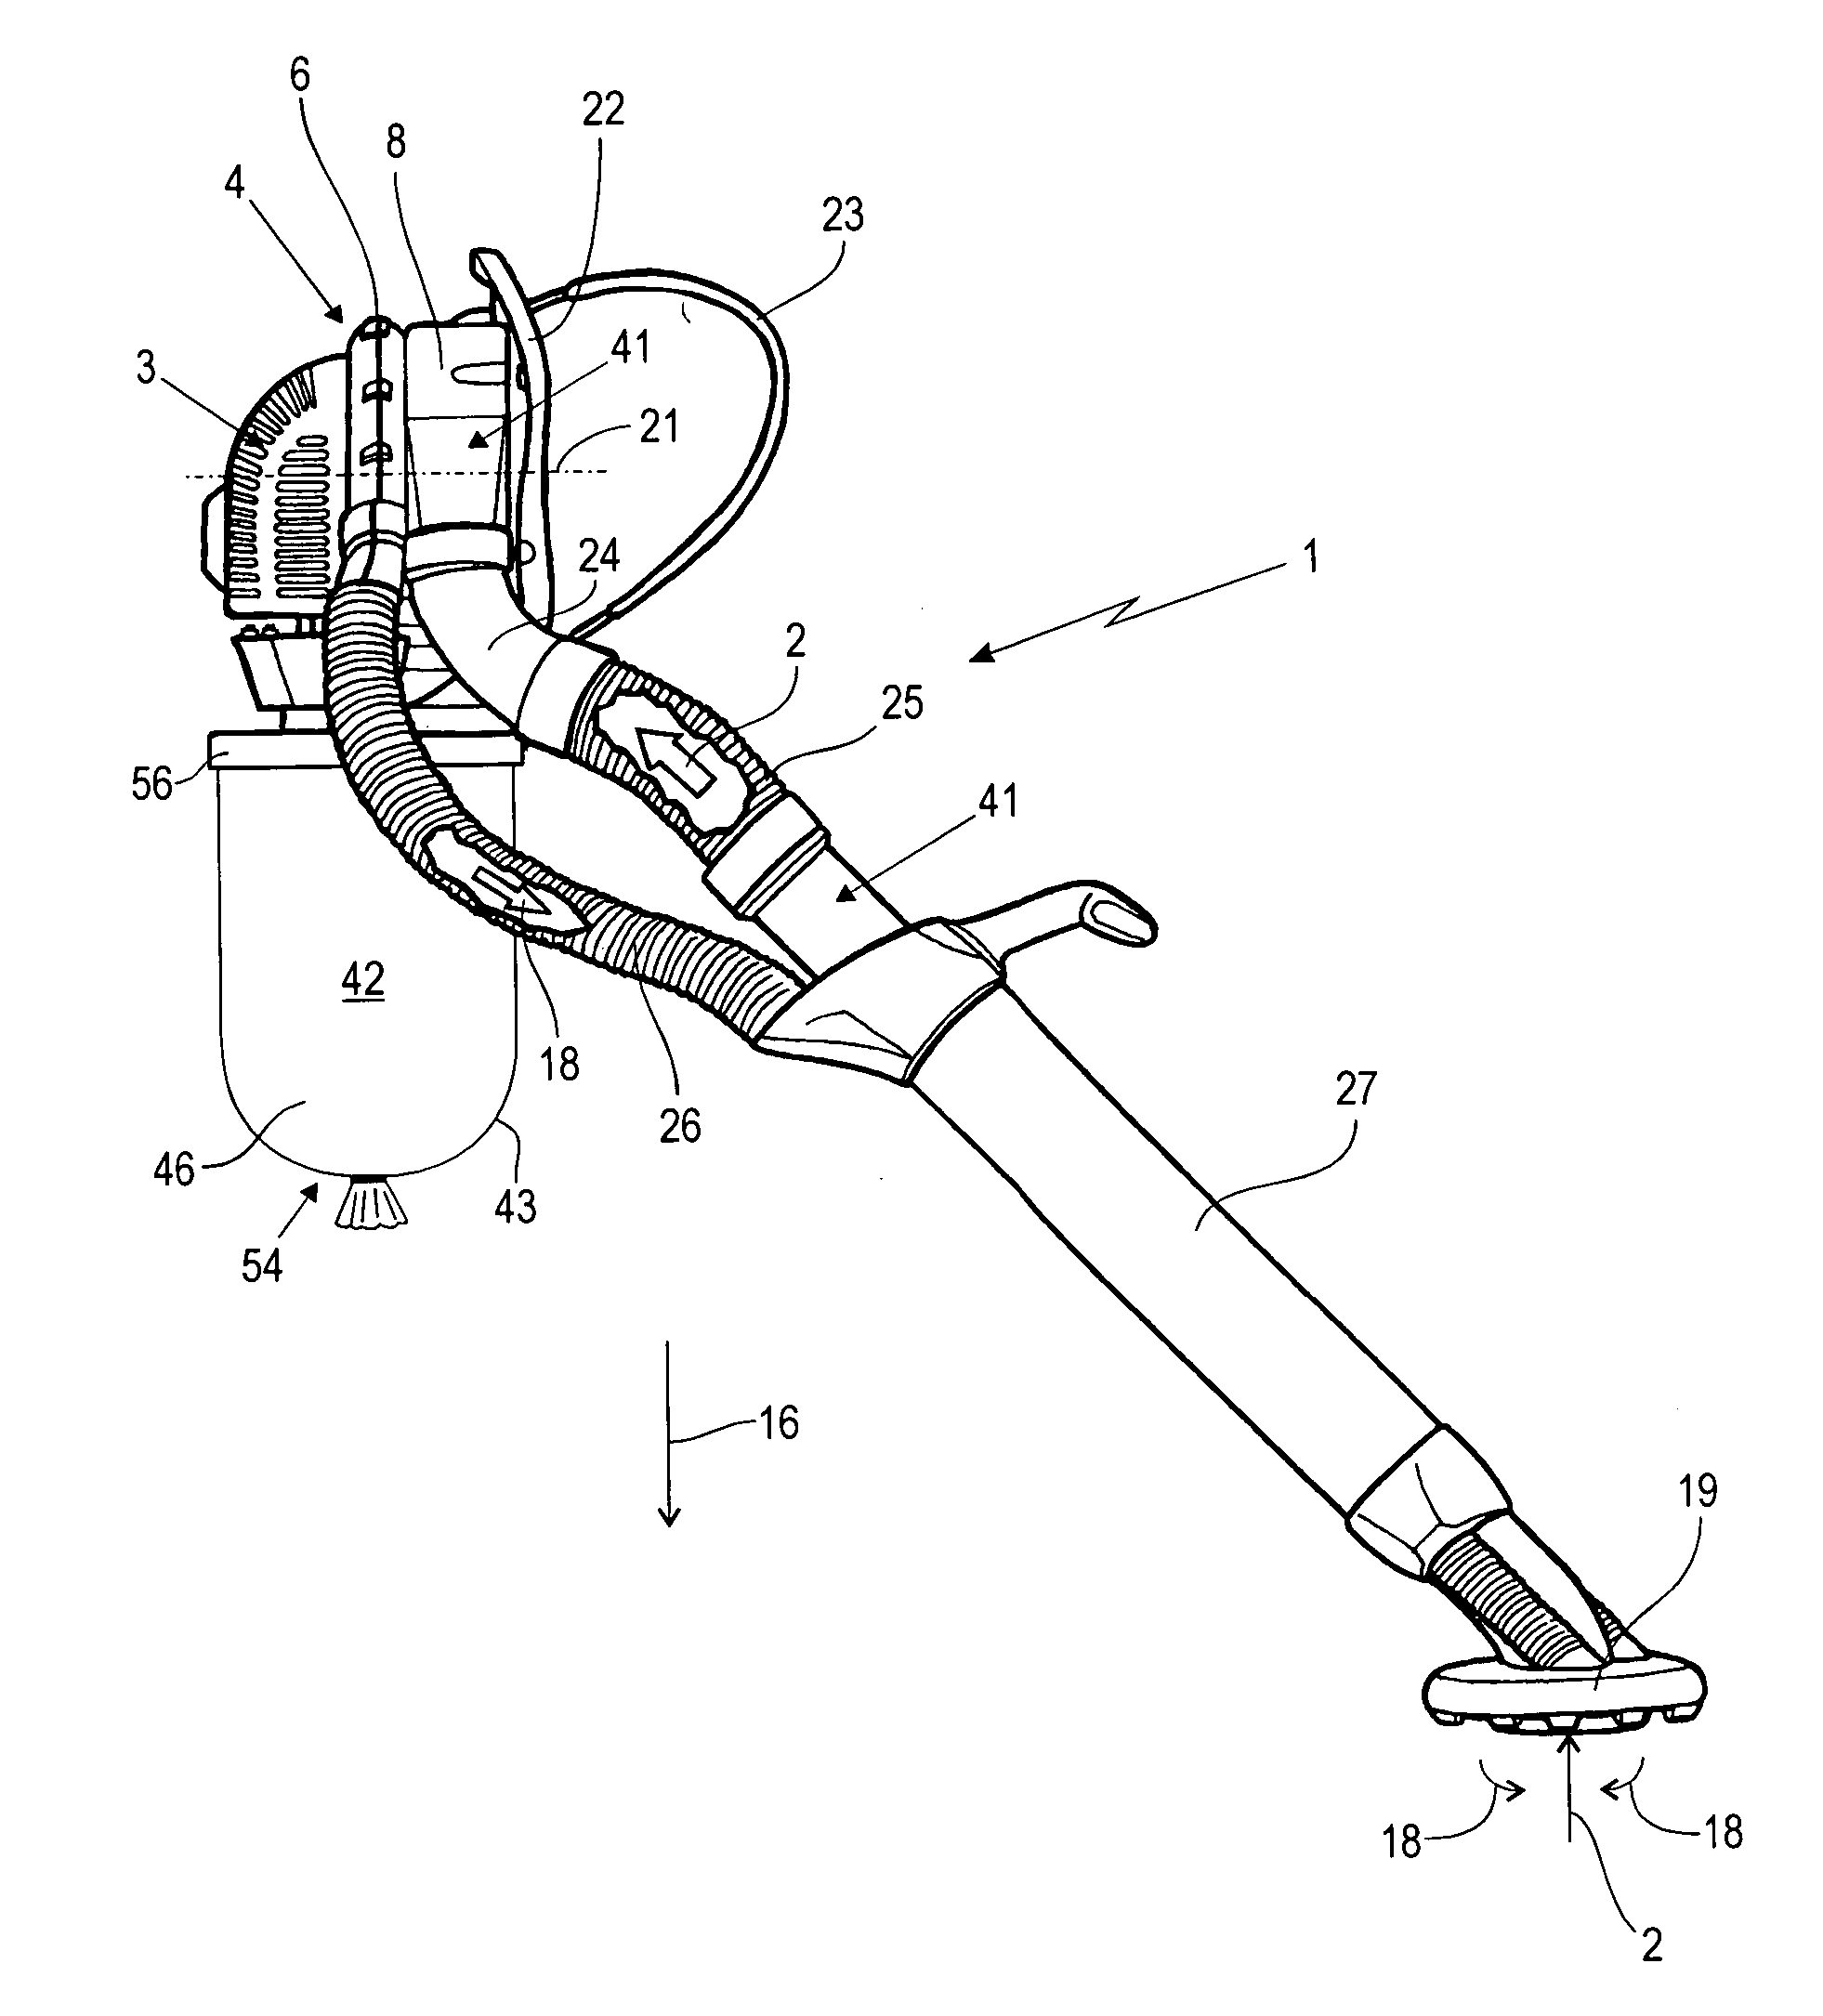 Manually guided suction apparatus